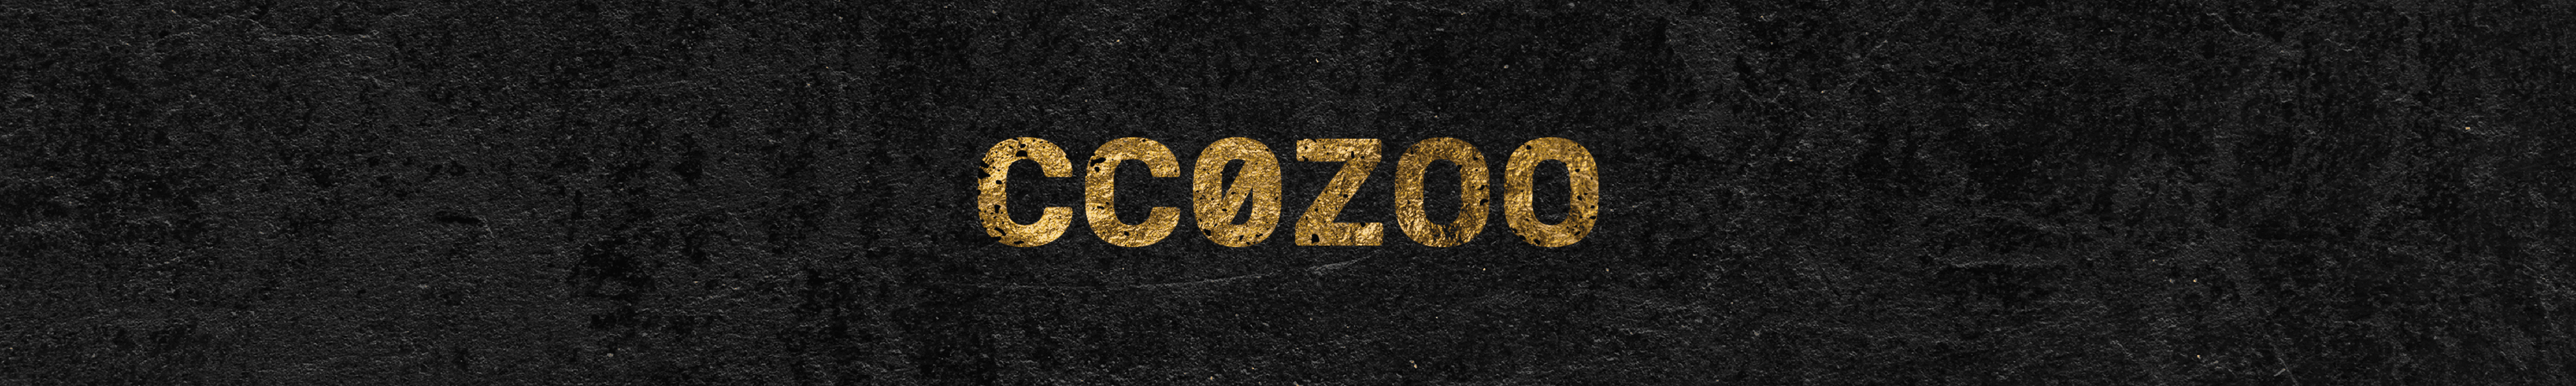 cc0zoo banner